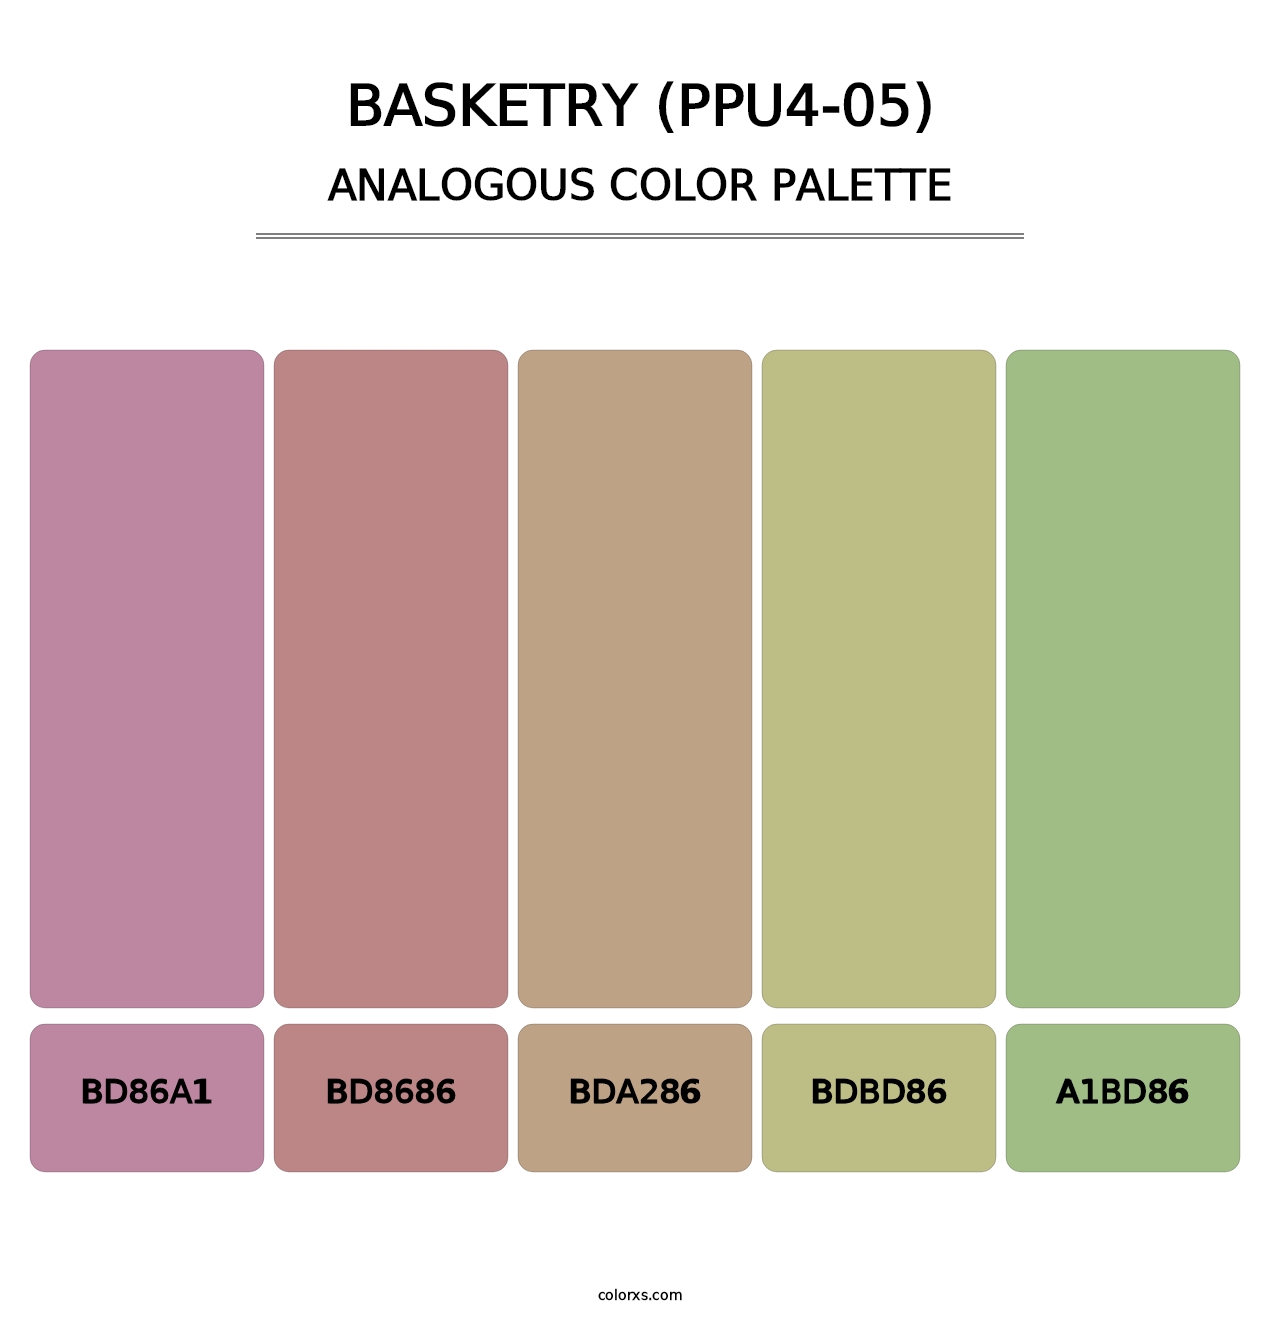 Basketry (PPU4-05) - Analogous Color Palette